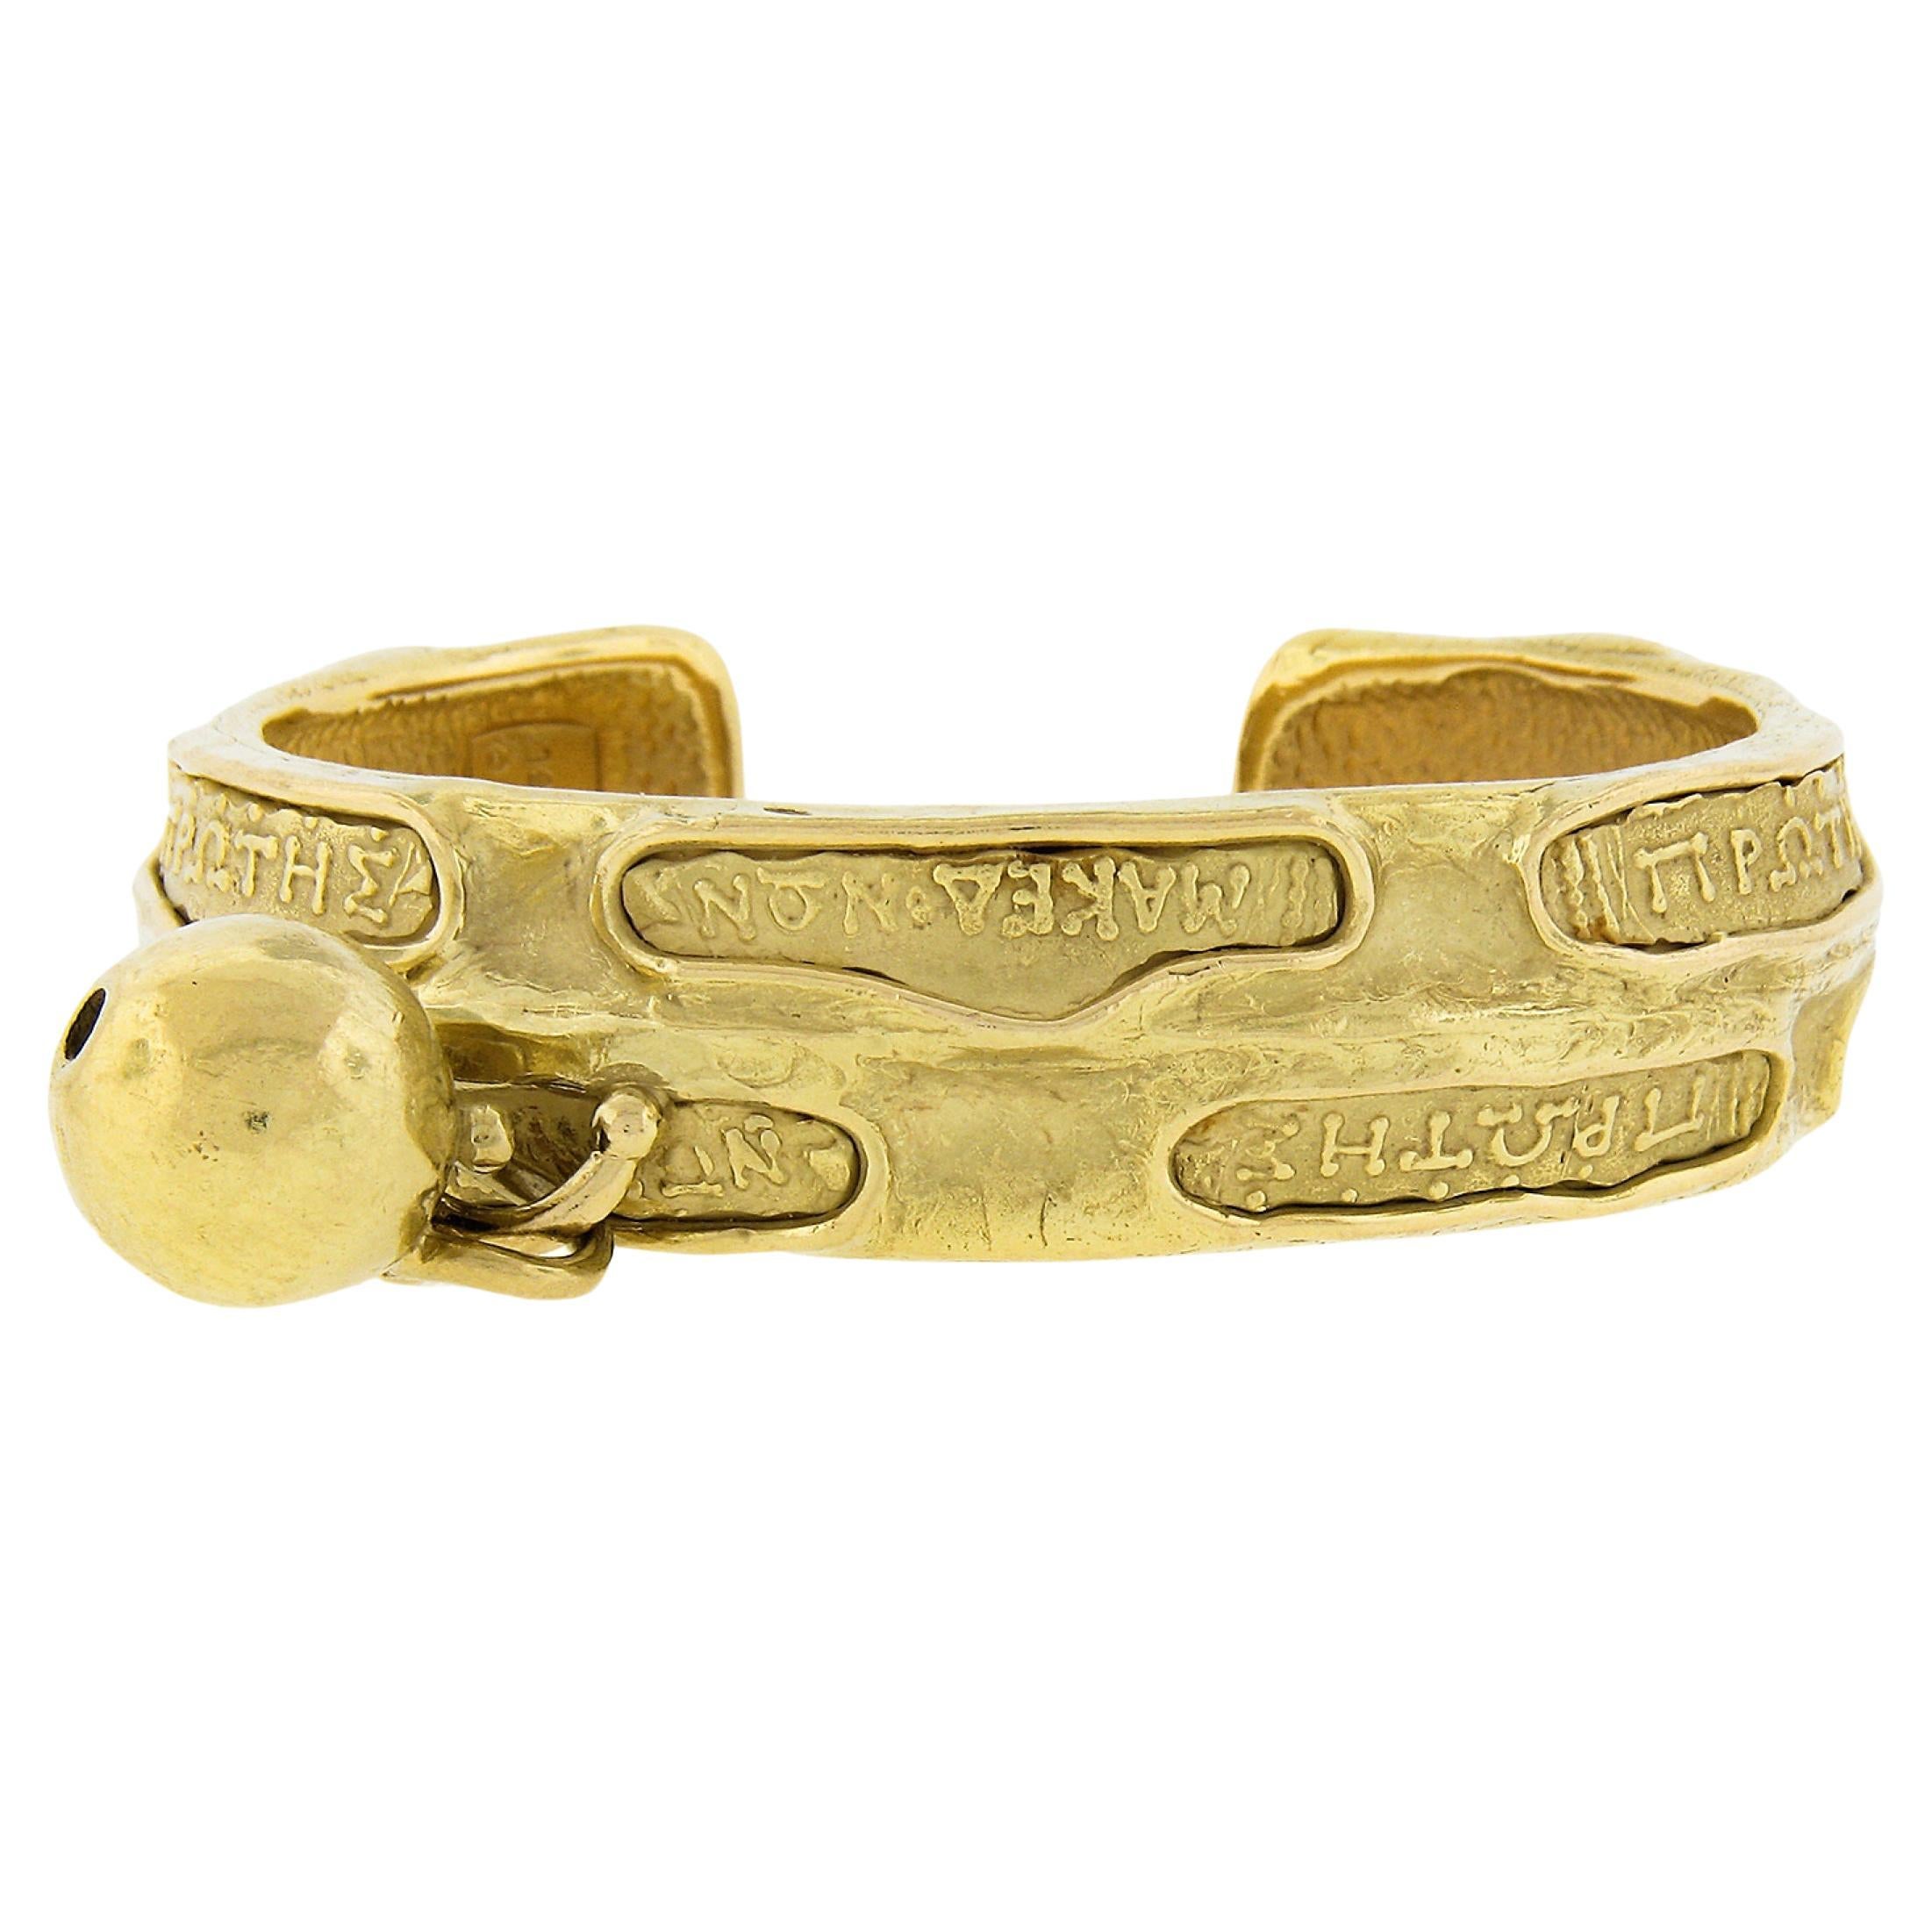 Denise Roberge 18k Yellow Gold Greek Writing Open Cuff Bracelet w/ Dangle Ball